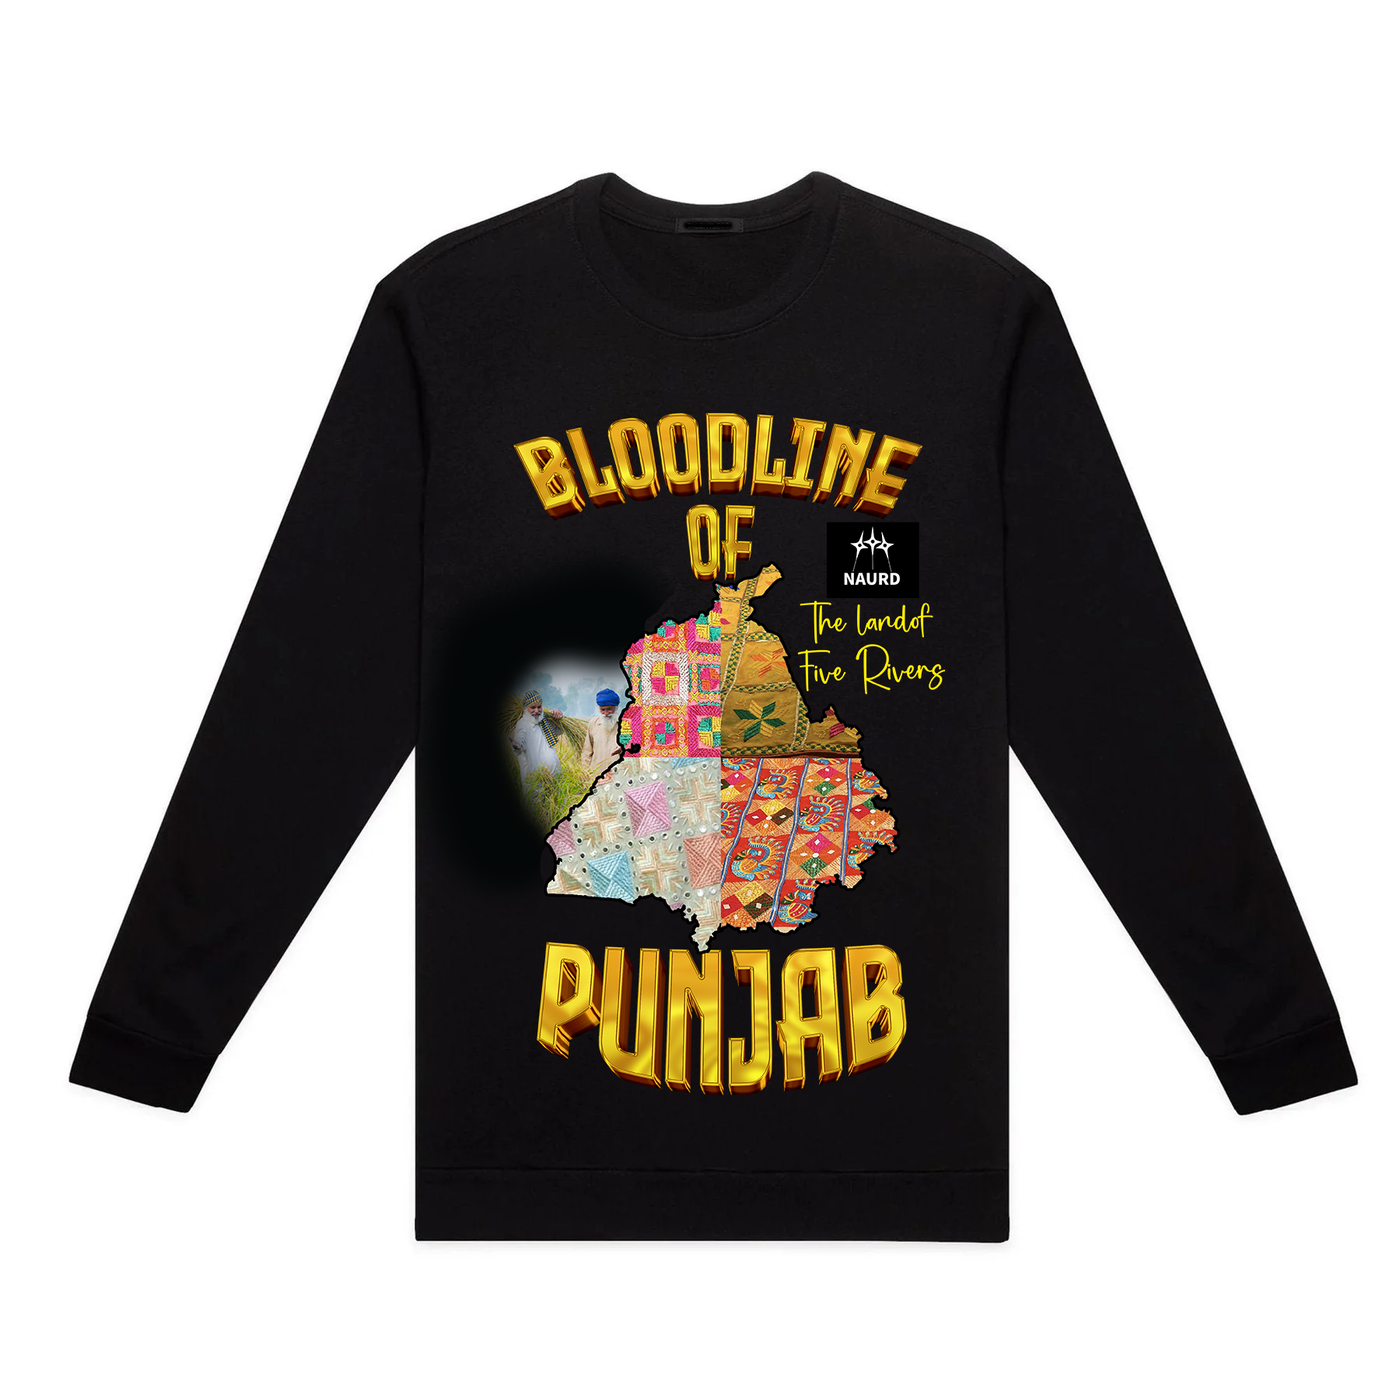 "Bloodline of Punjab" long sleeve shirt